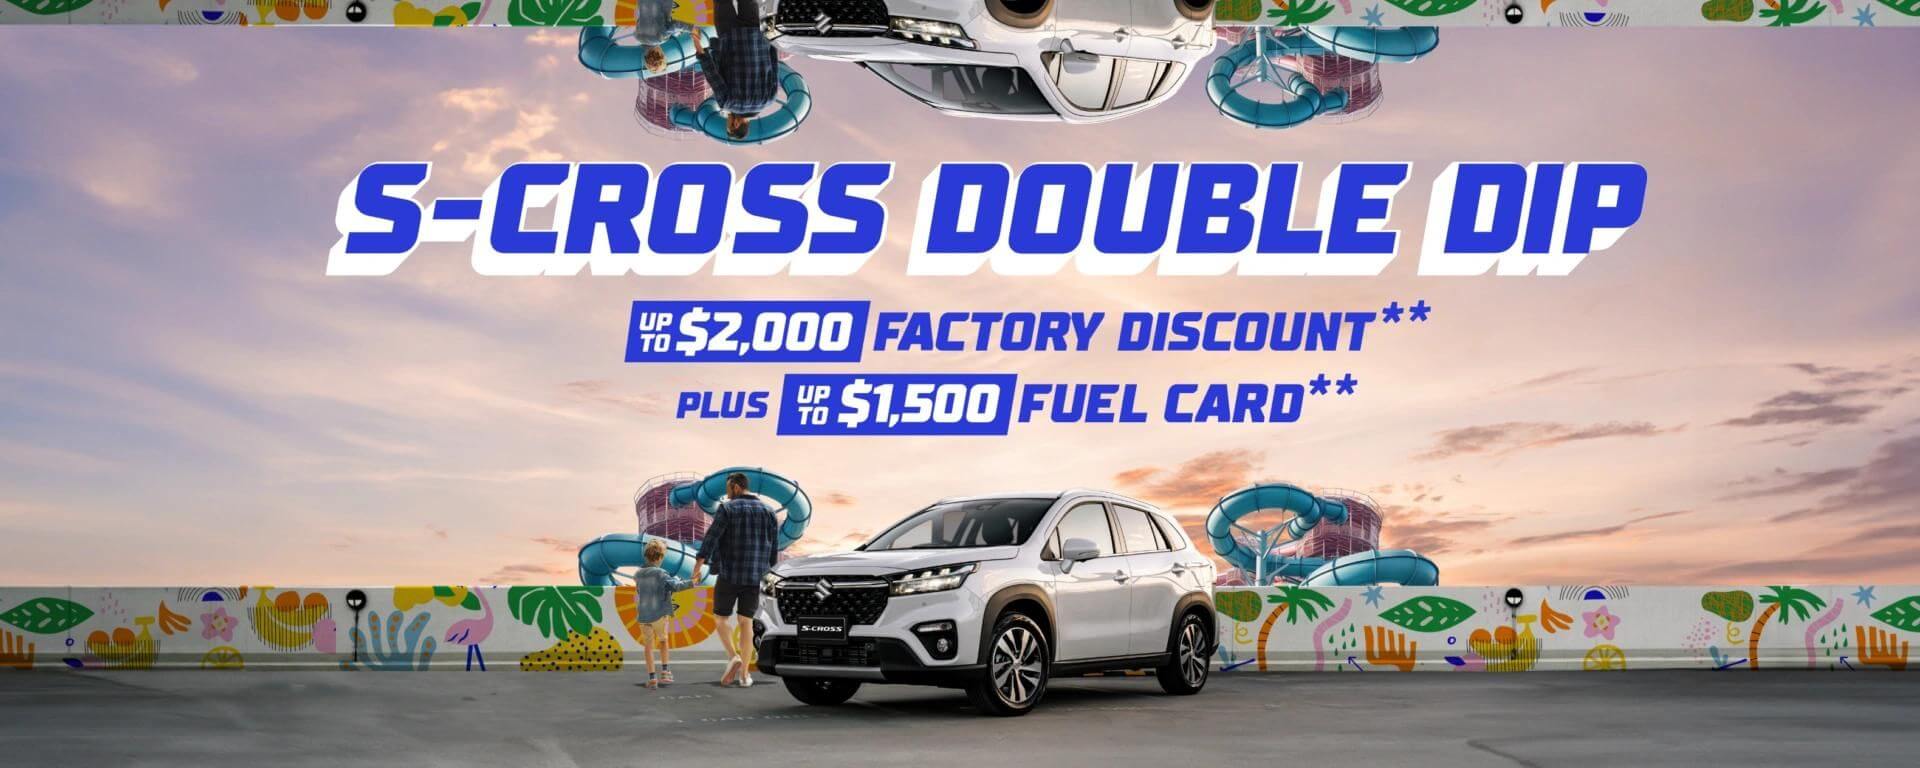 S-Cross Double Dip | Factory discount plus Fuel card